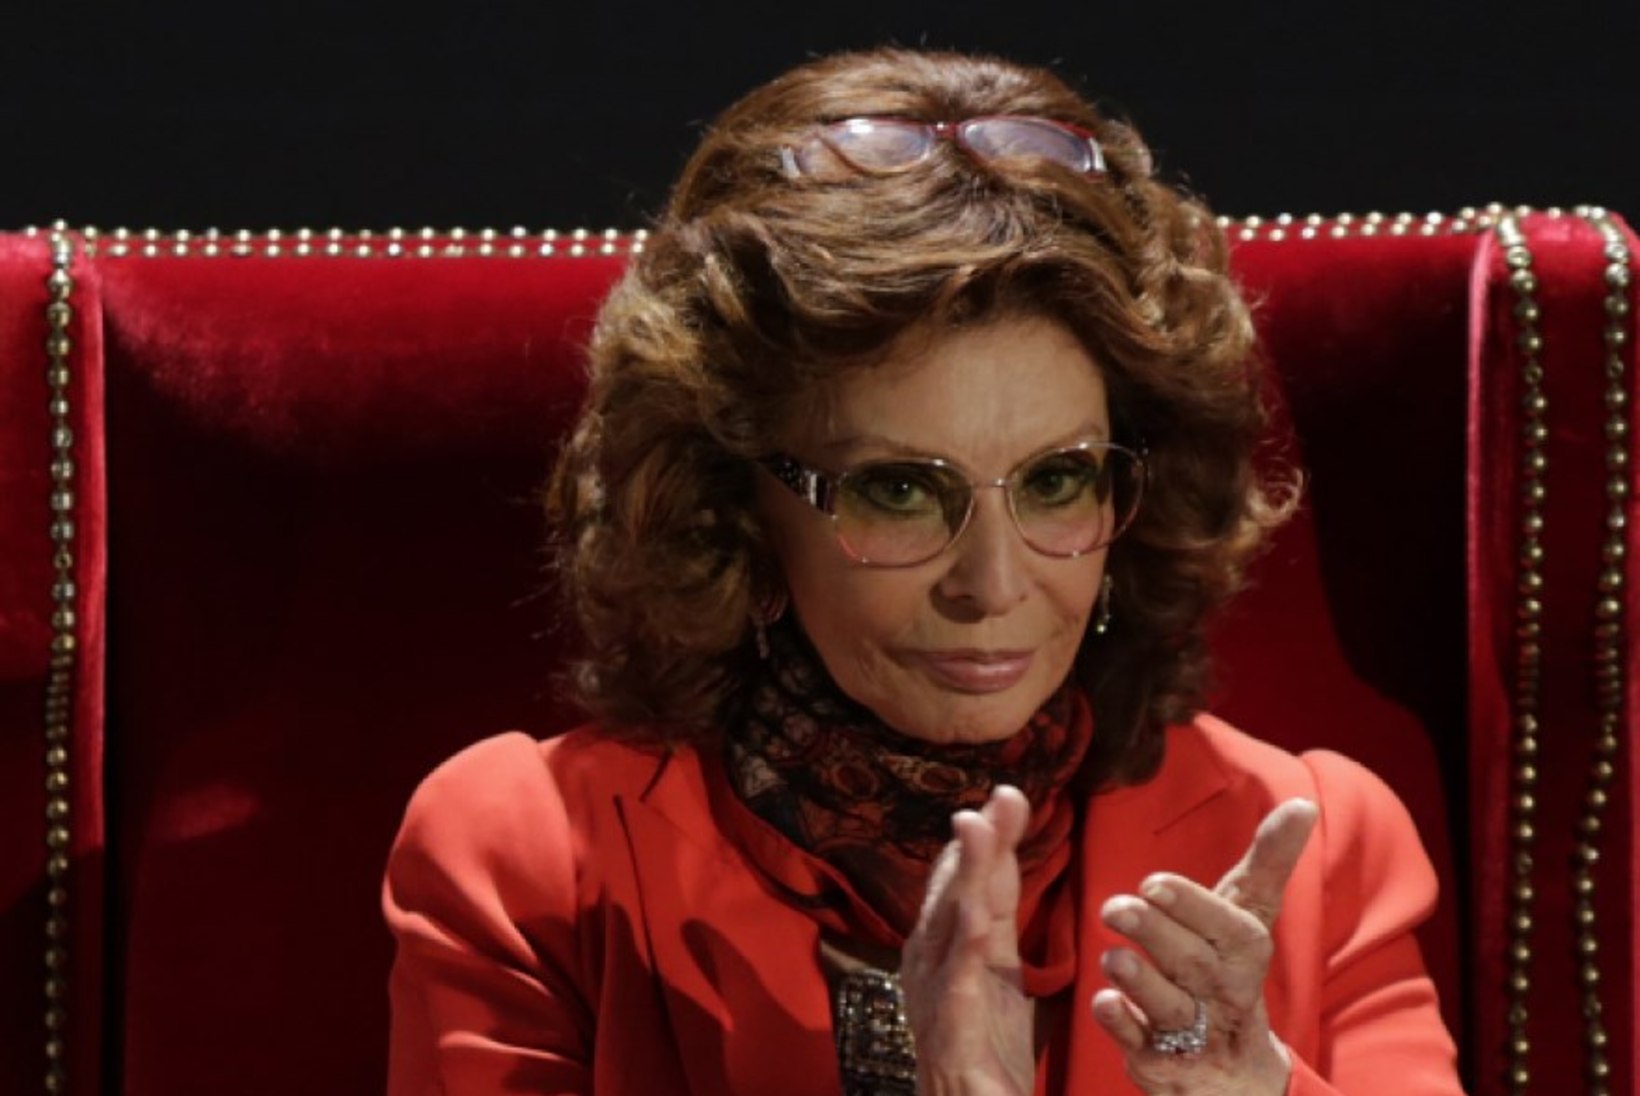 Iginoor Sophia Loren sai 80aastaseks!